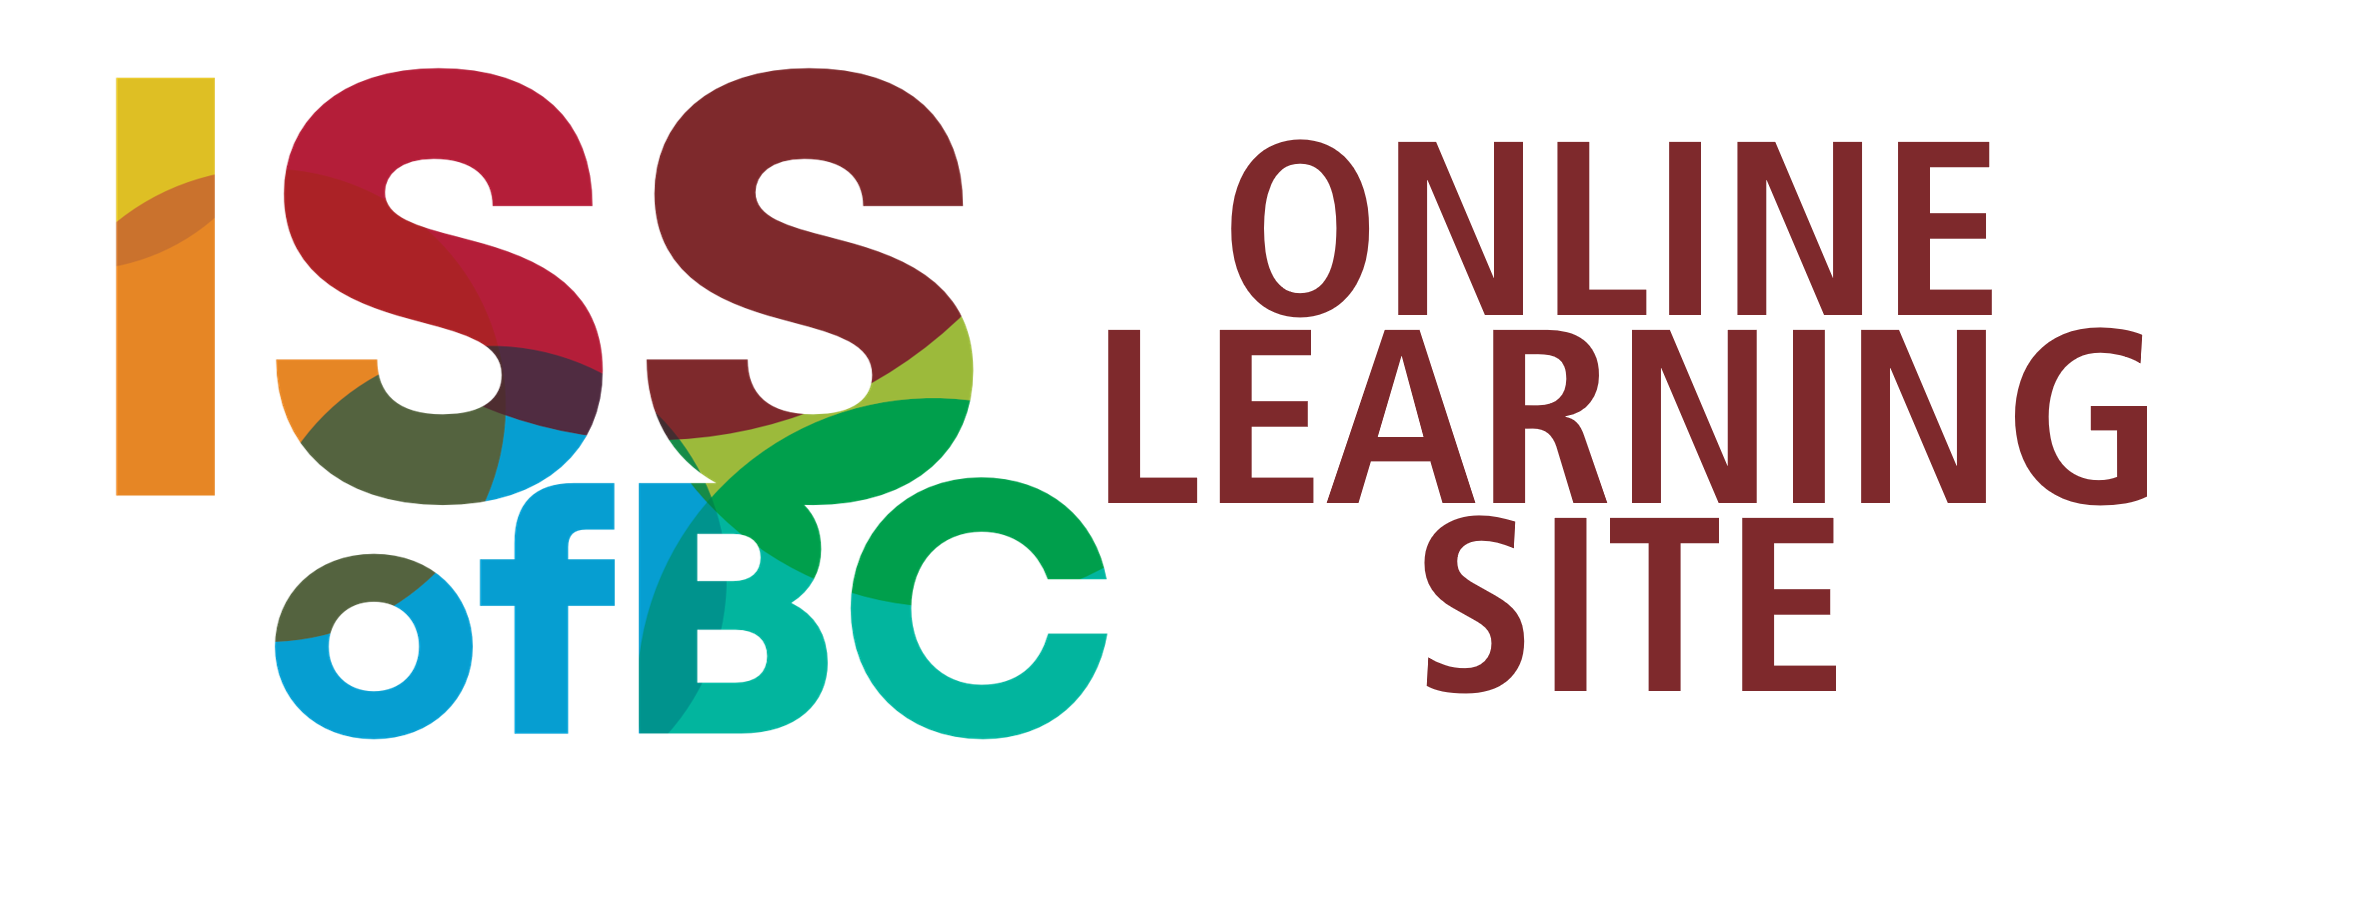 ISSofBC Online Learning